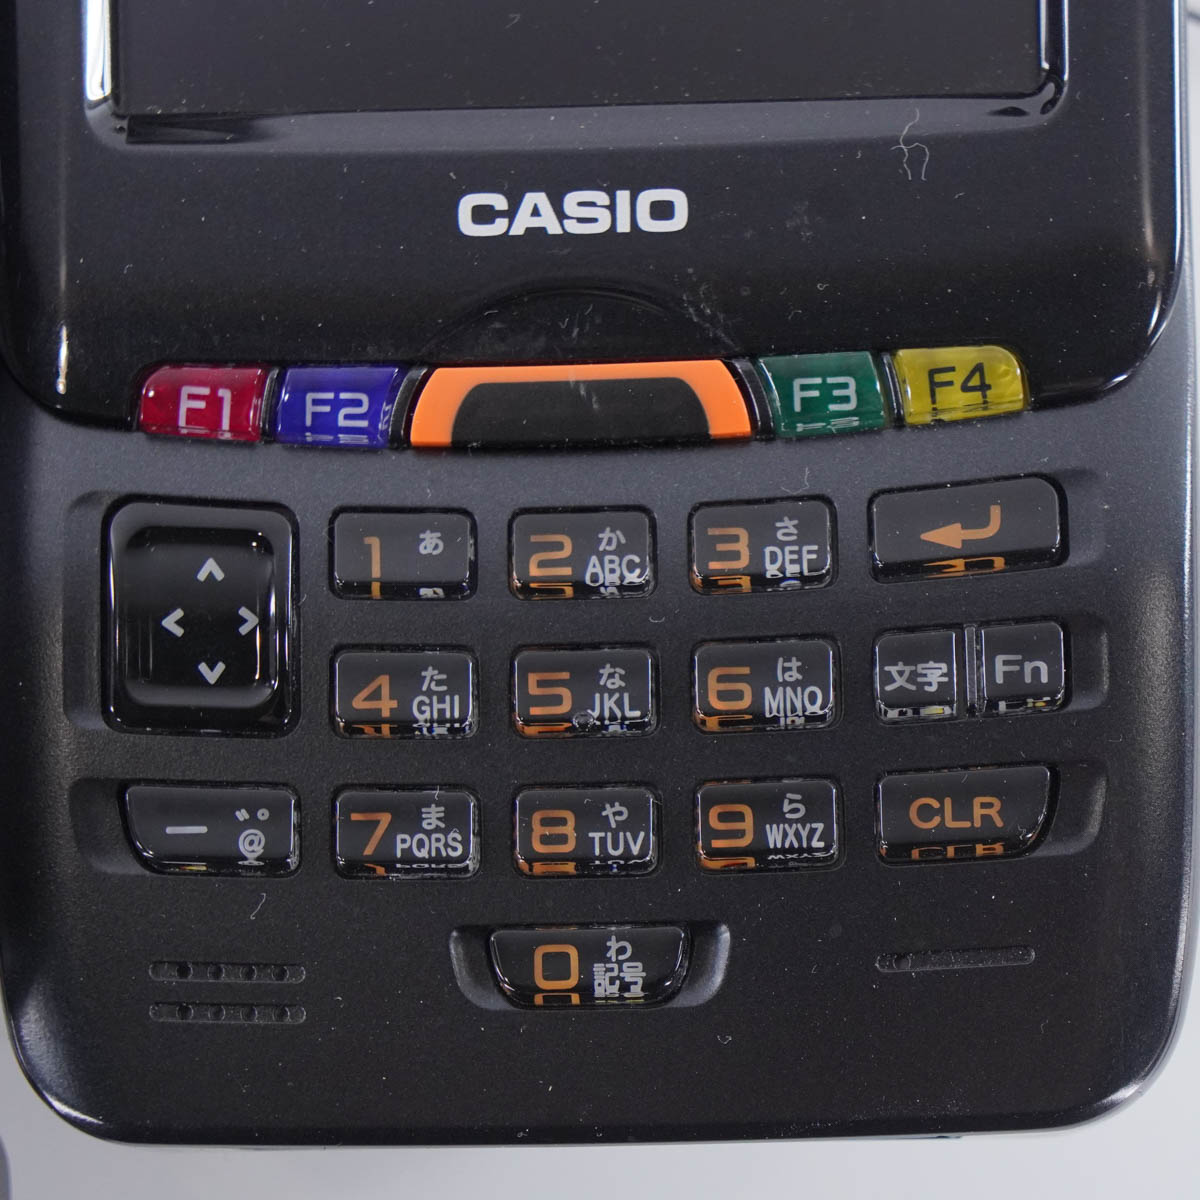 [PG]USED 8日保証 7台セット CASIO DT-5300L50S ハンディターミナル 業務用PDA スキャナー ACアダプター 充電器 [04606-0021] - 7